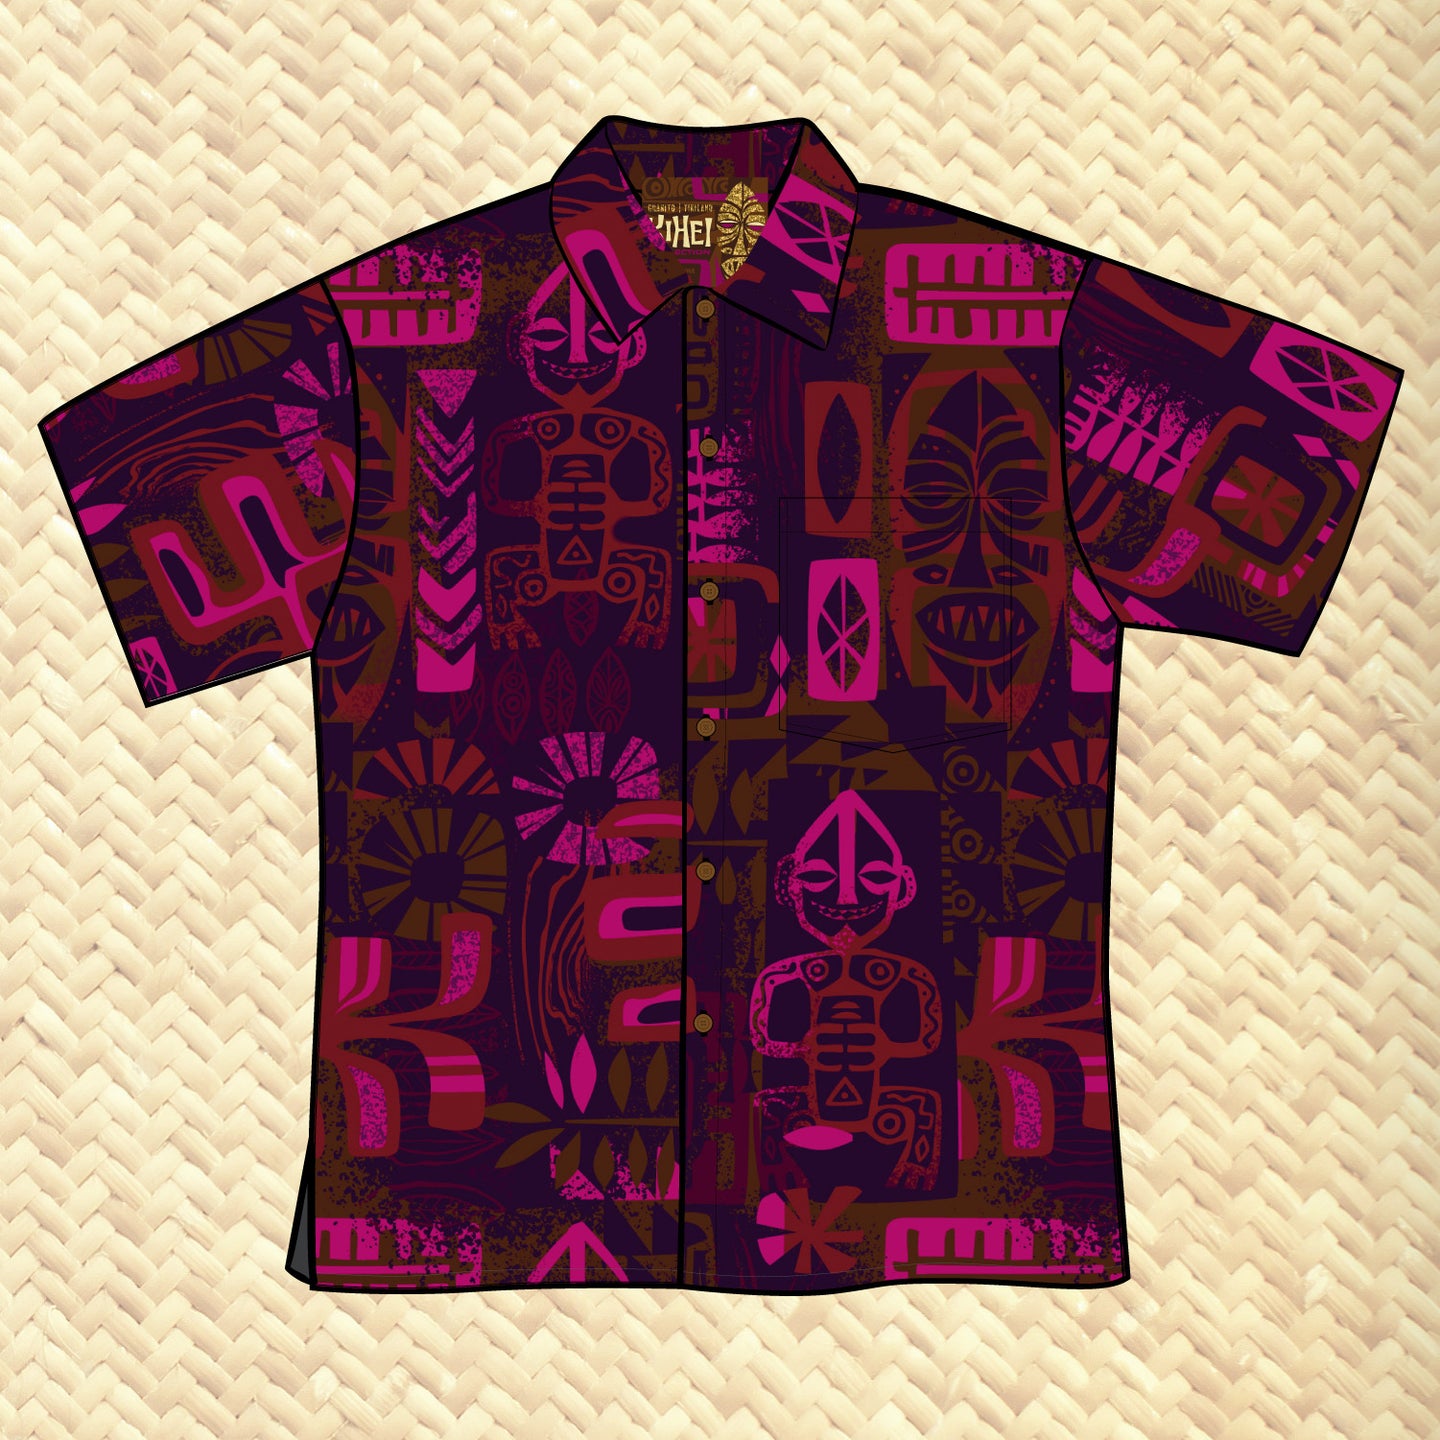 LAST CHANCE, 'Kihei Flow' Gold Label Limited Edition Unisex Aloha Shirt